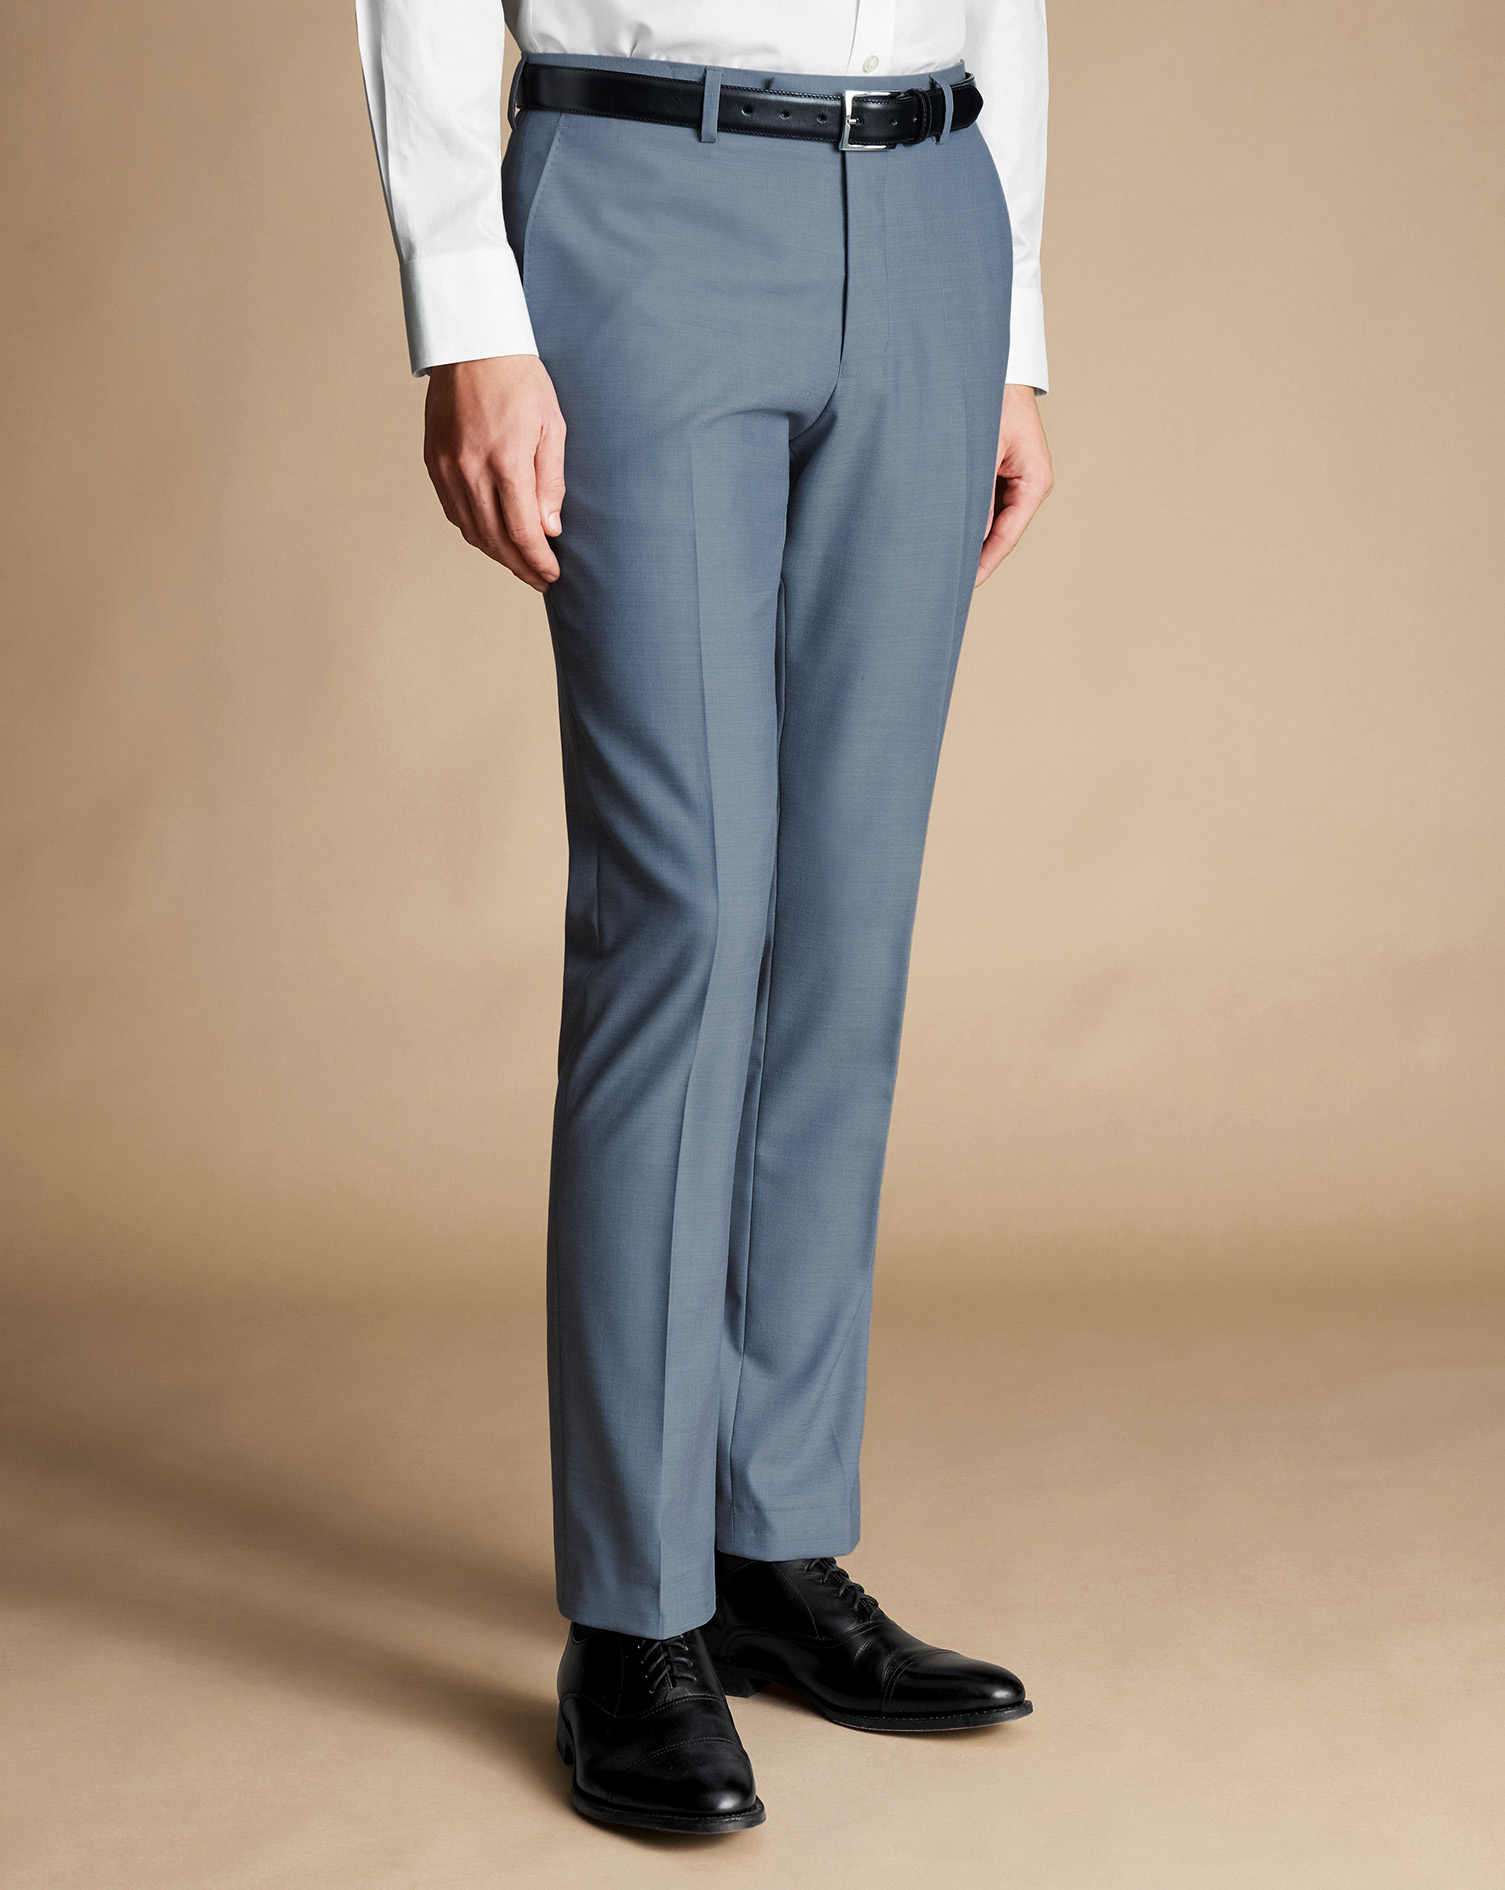 Men's Charles Tyrwhitt Ultimate Performance Sharkskin Suit Trousers - Mid Blue Size 38/32
